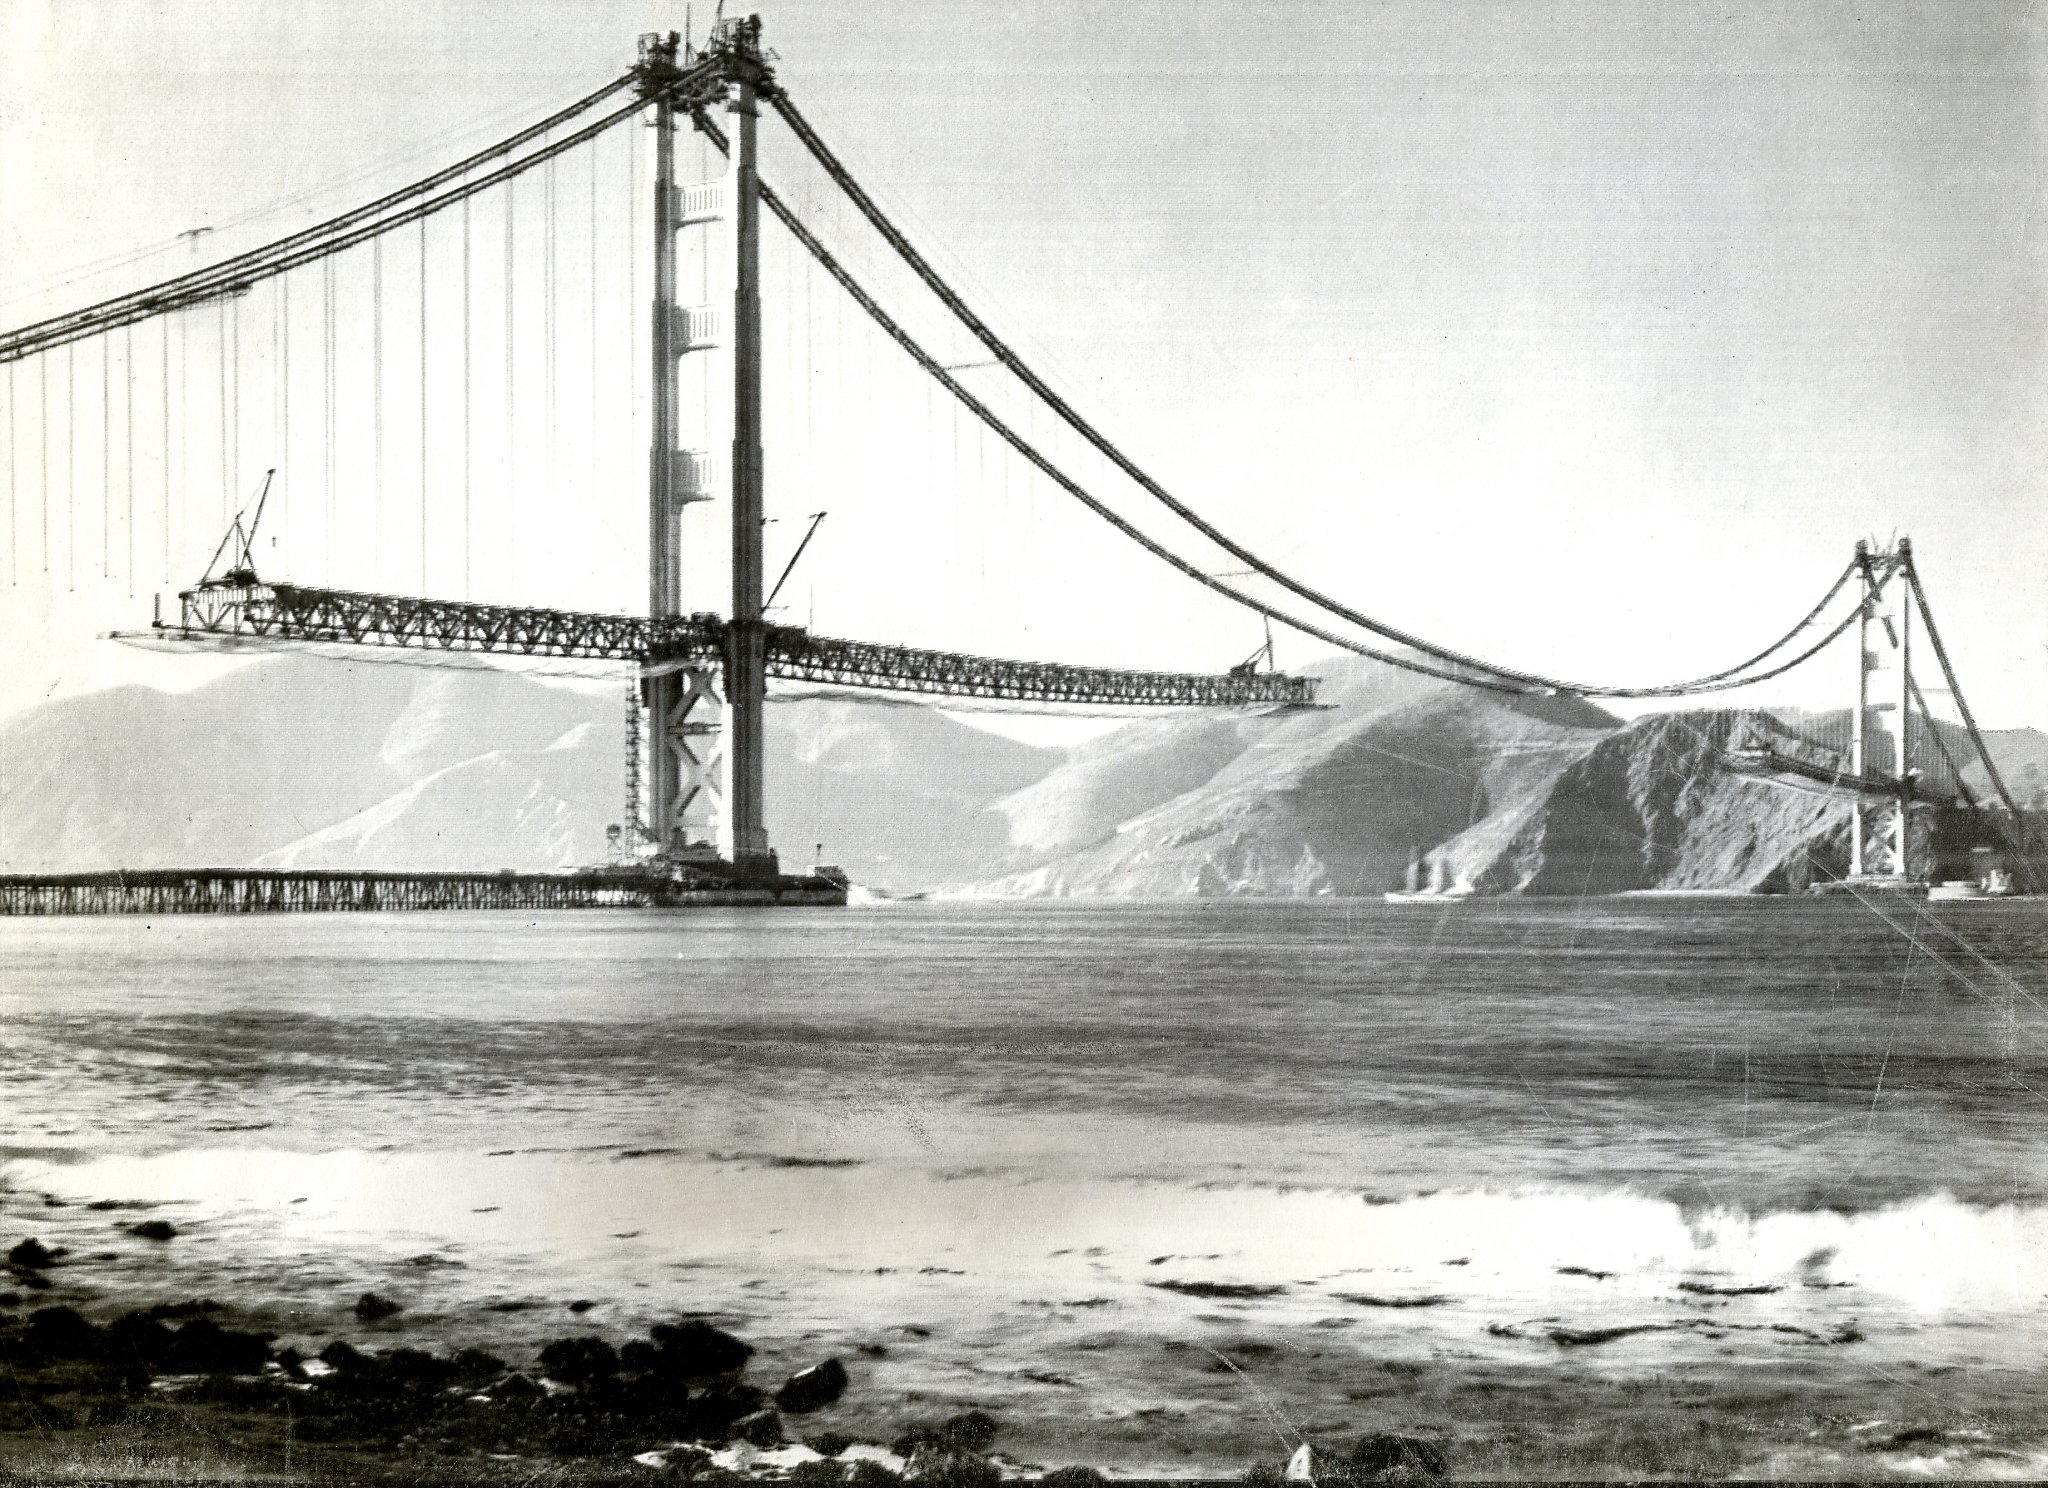 89 years ago, construction began on the Golden Gate Bridge